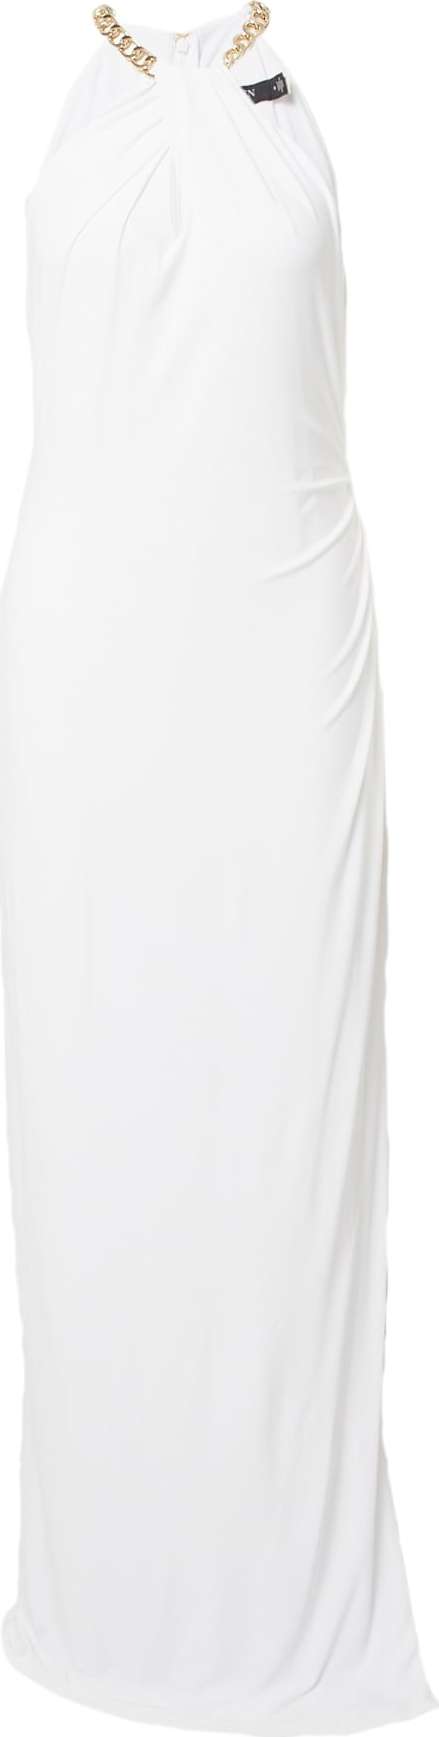 Lauren Ralph Lauren Šaty bílá